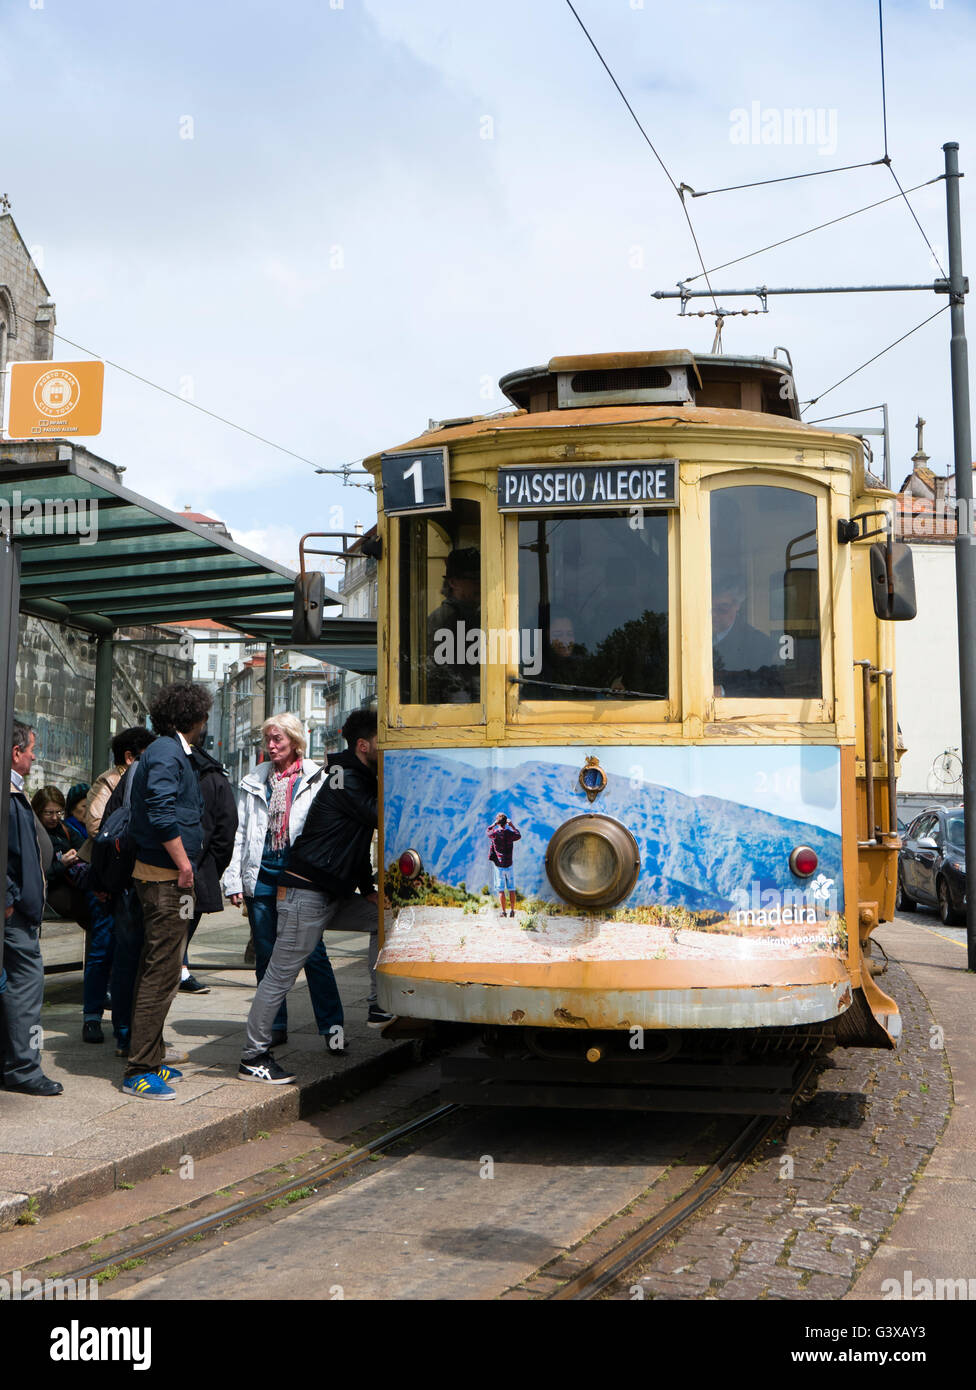 Passengers boarding a traditional tram, Porto, Portugal. Stock Photo